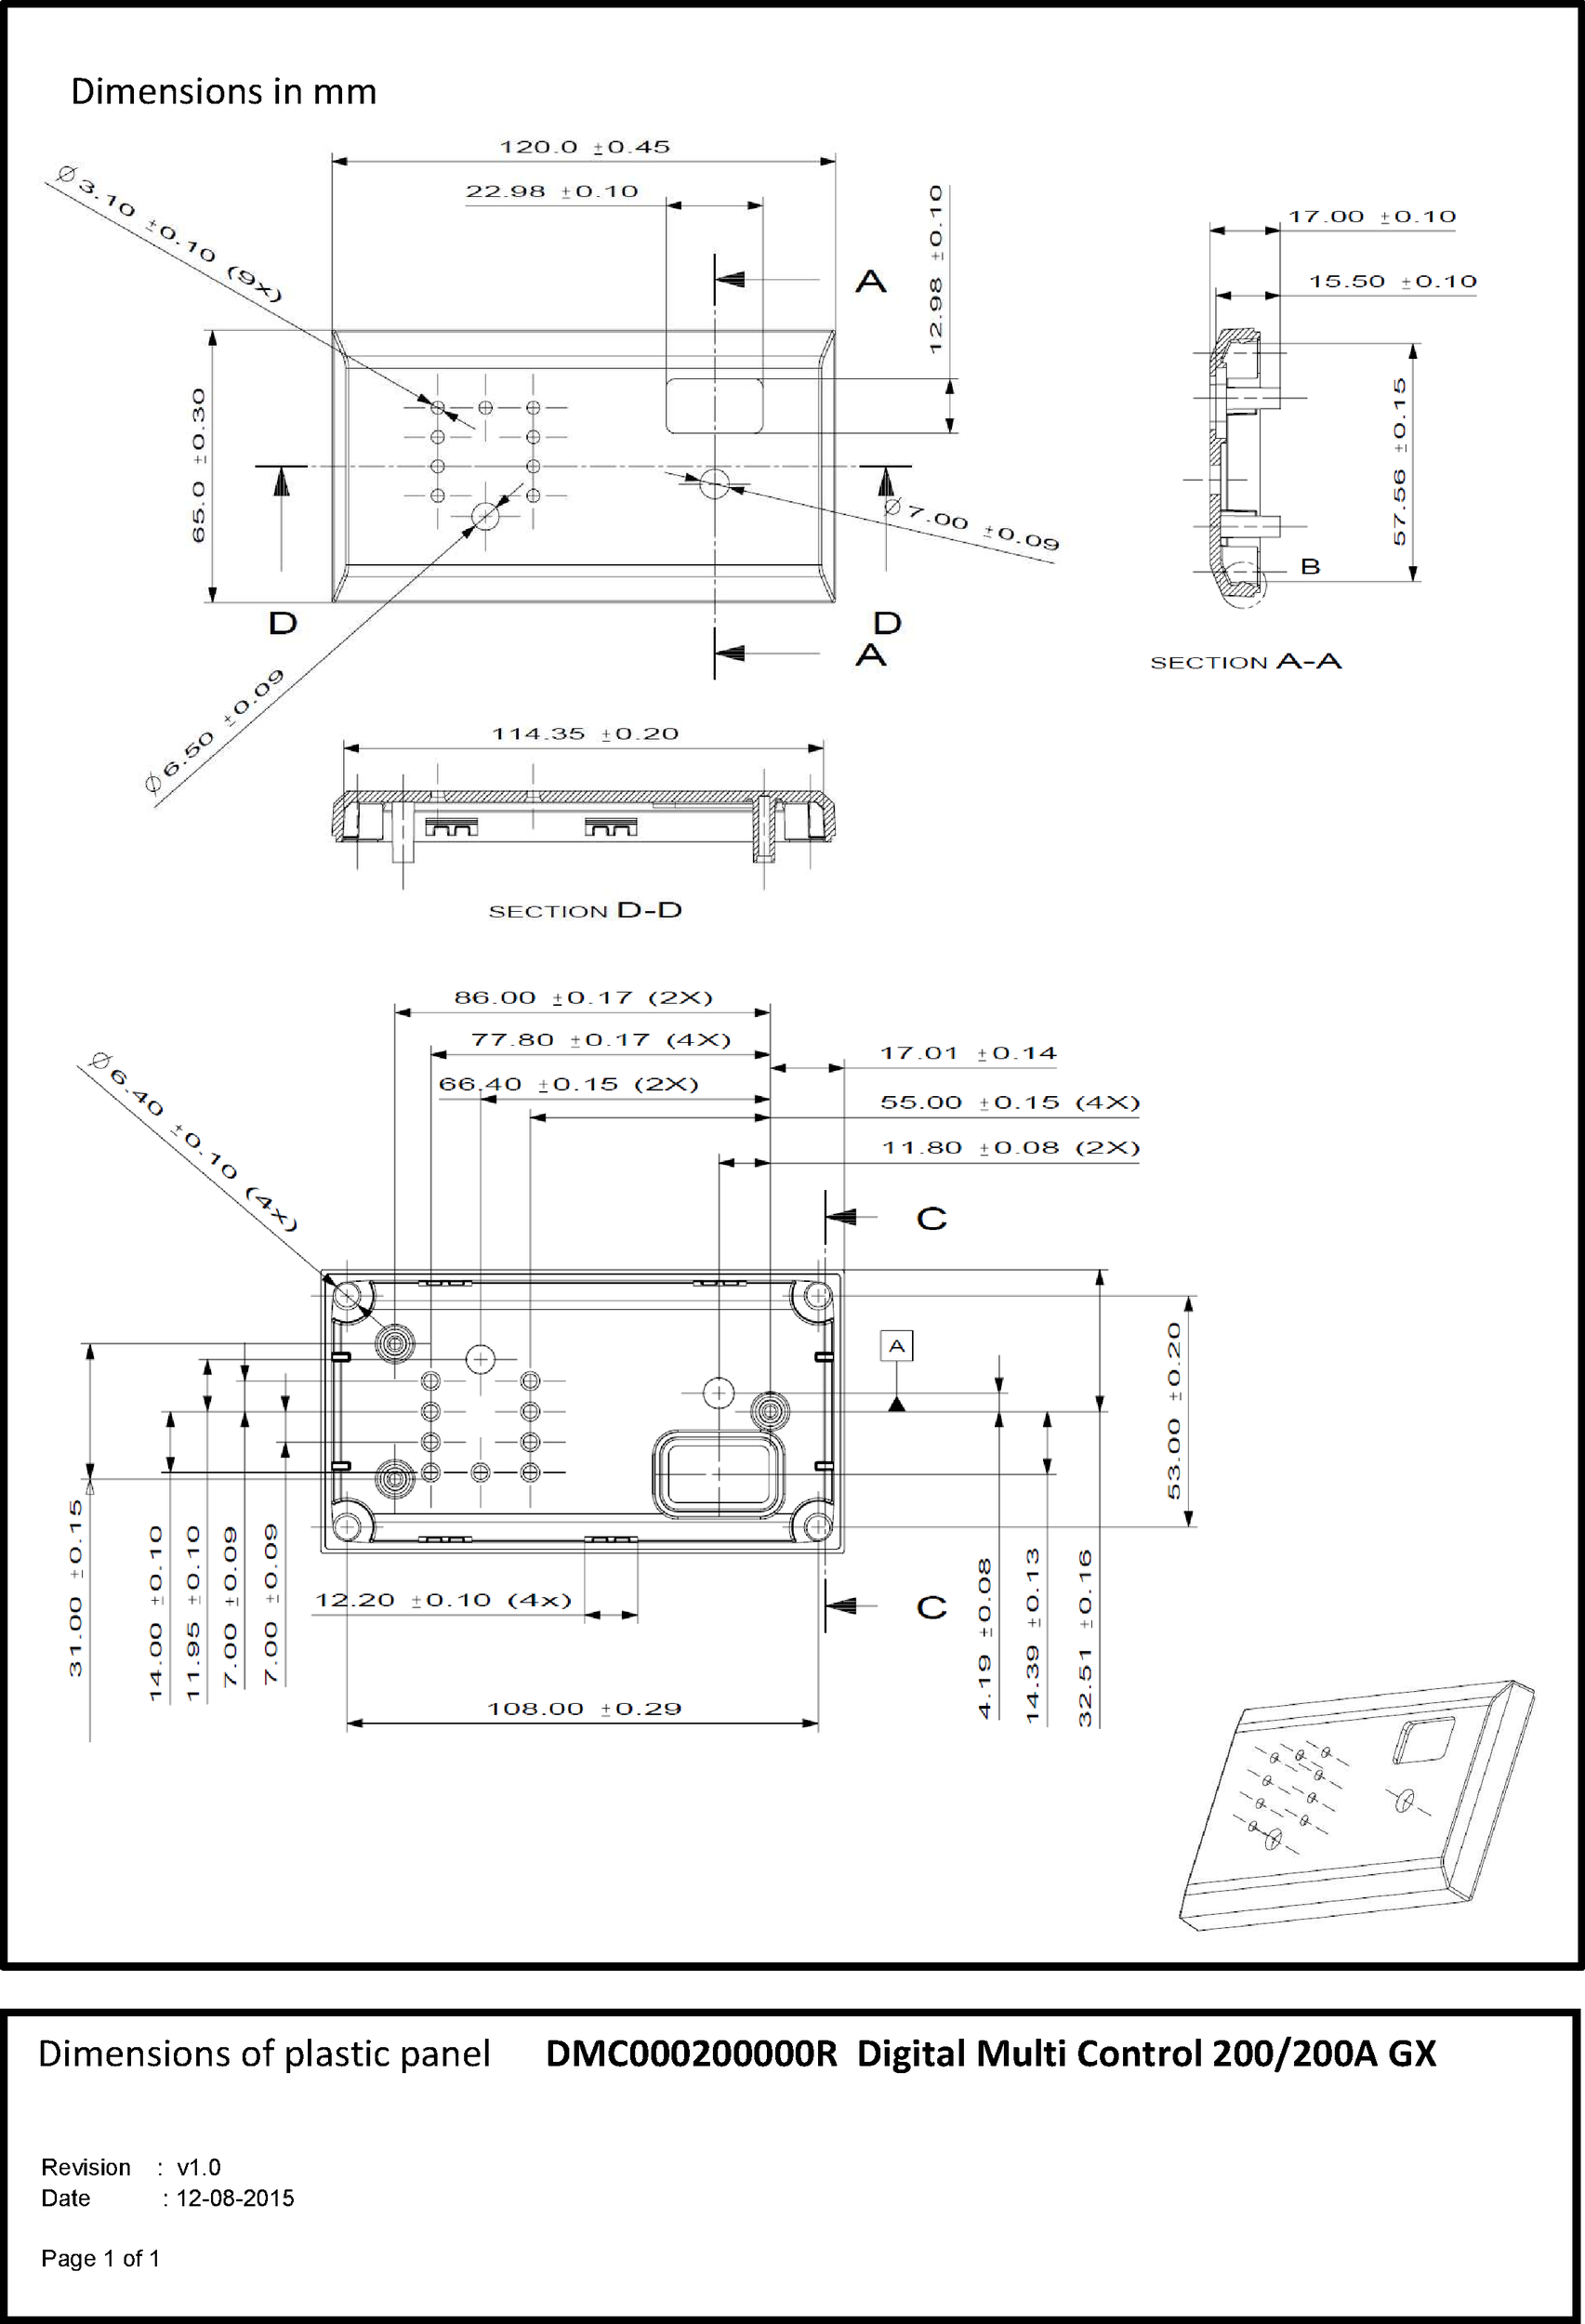 Dimensions-of-plastic-panel-for-DMC000200000R-Digital-Multi-Control-200-200A-GX-_v1_0.pdf